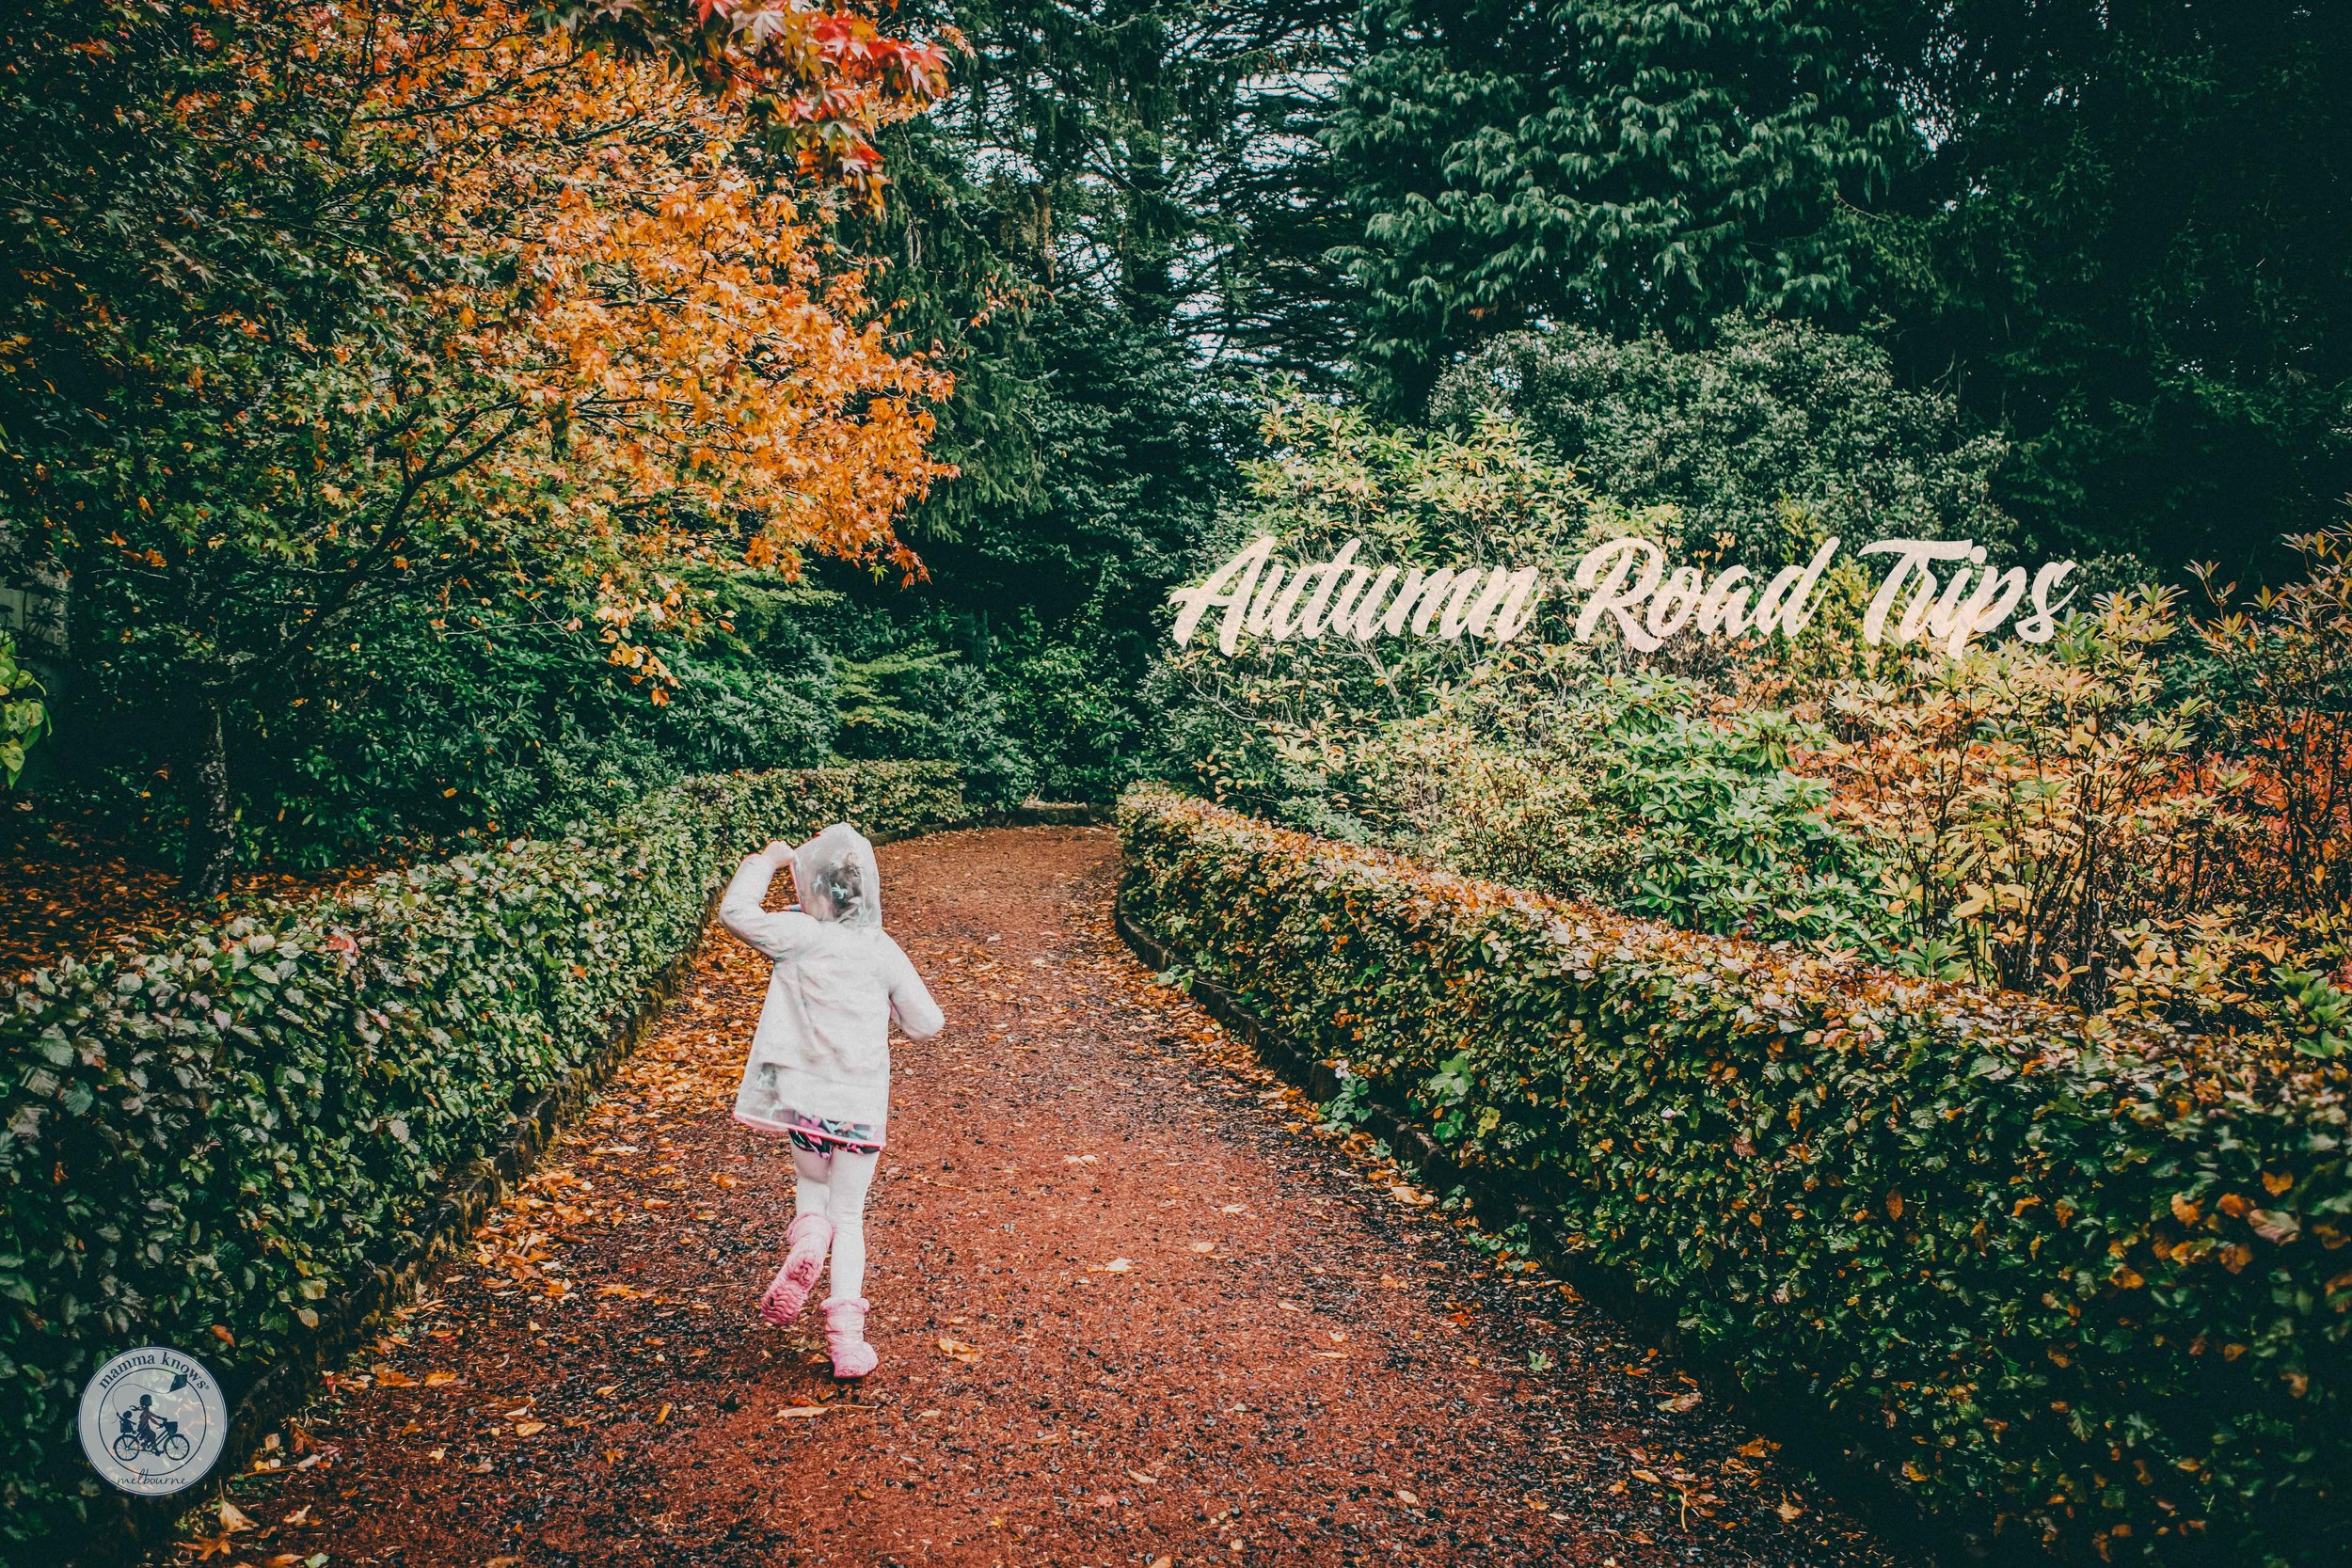 Autumn Road Trips (Copy)